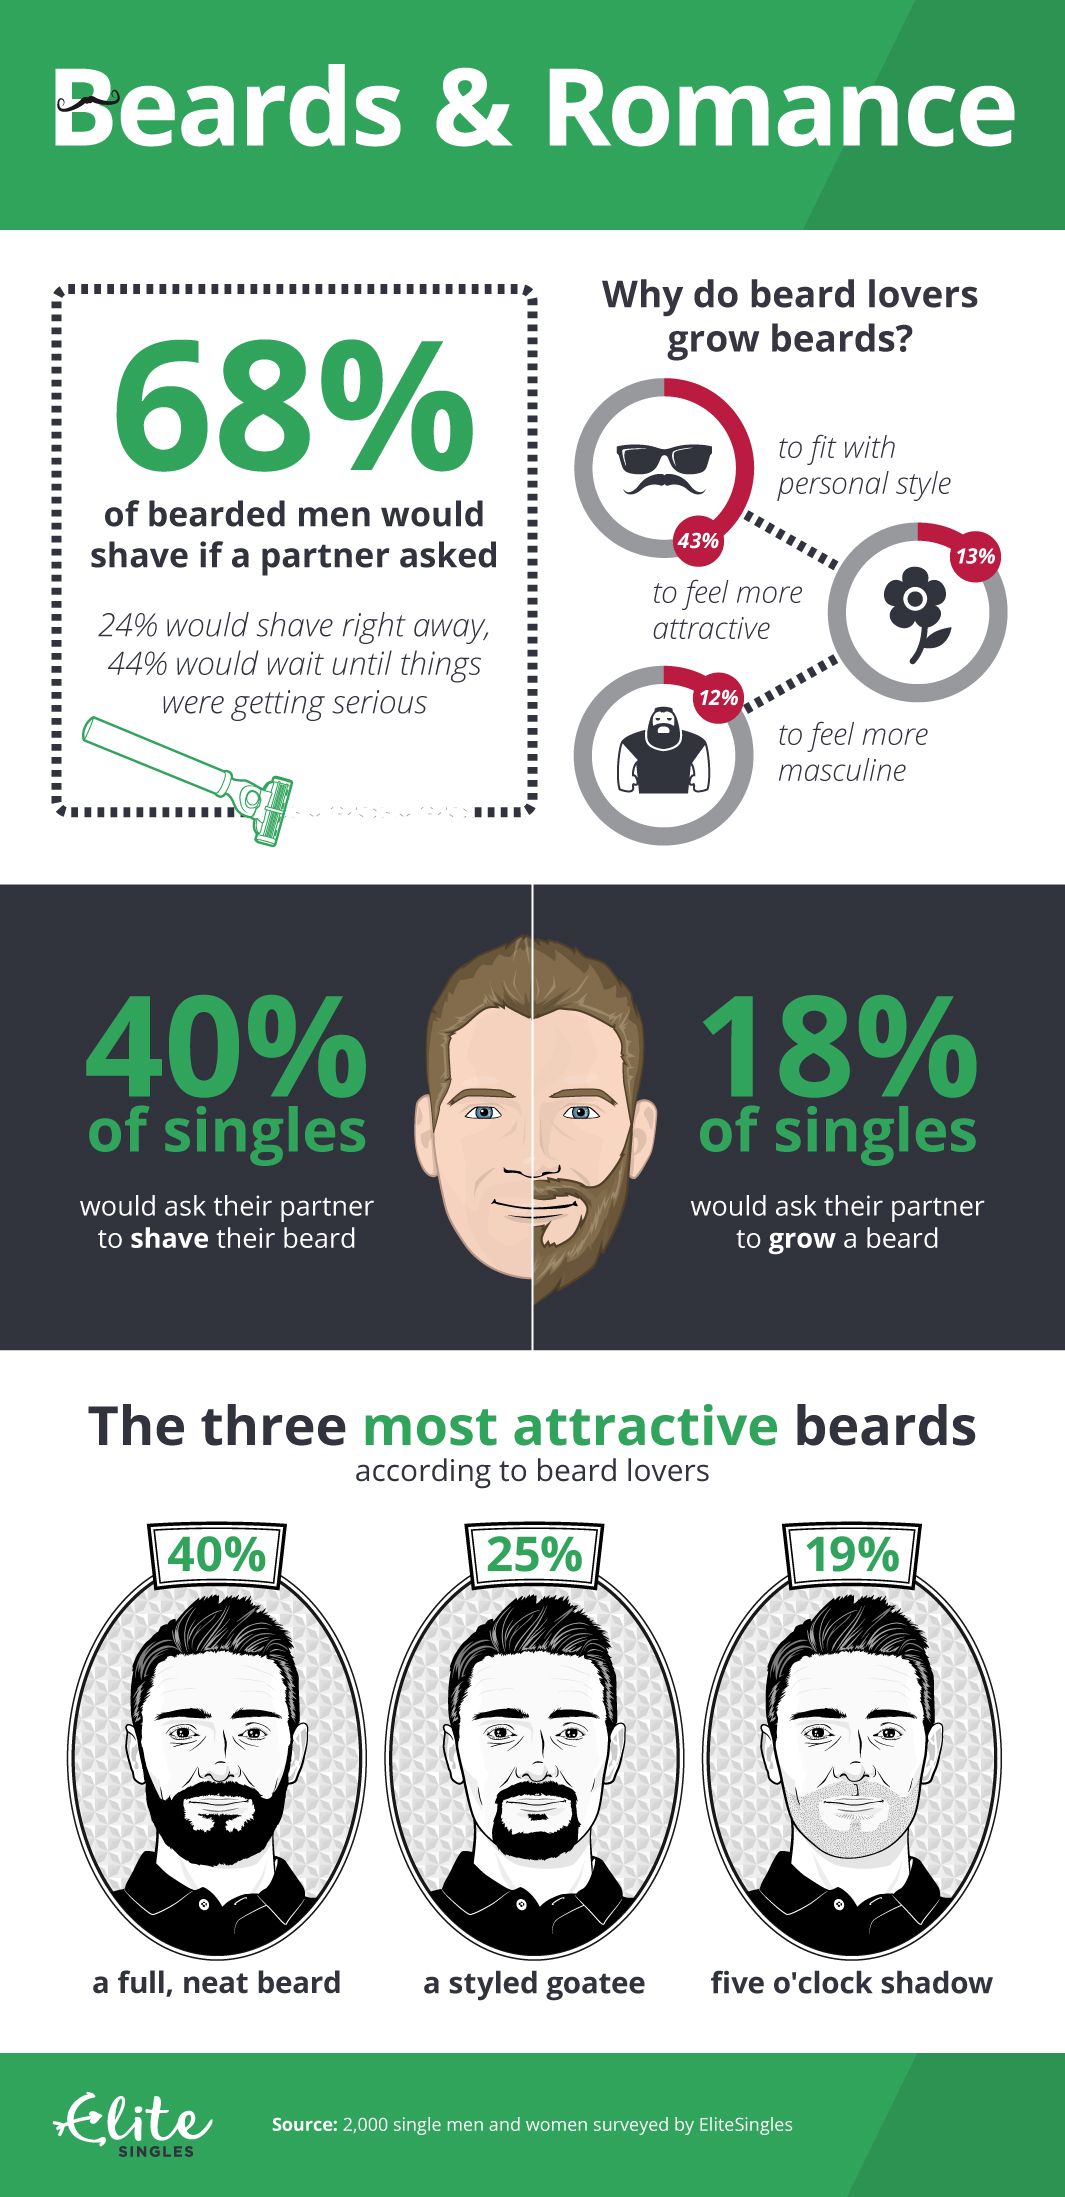 EliteSingles World Beard Day beards and romance infographic